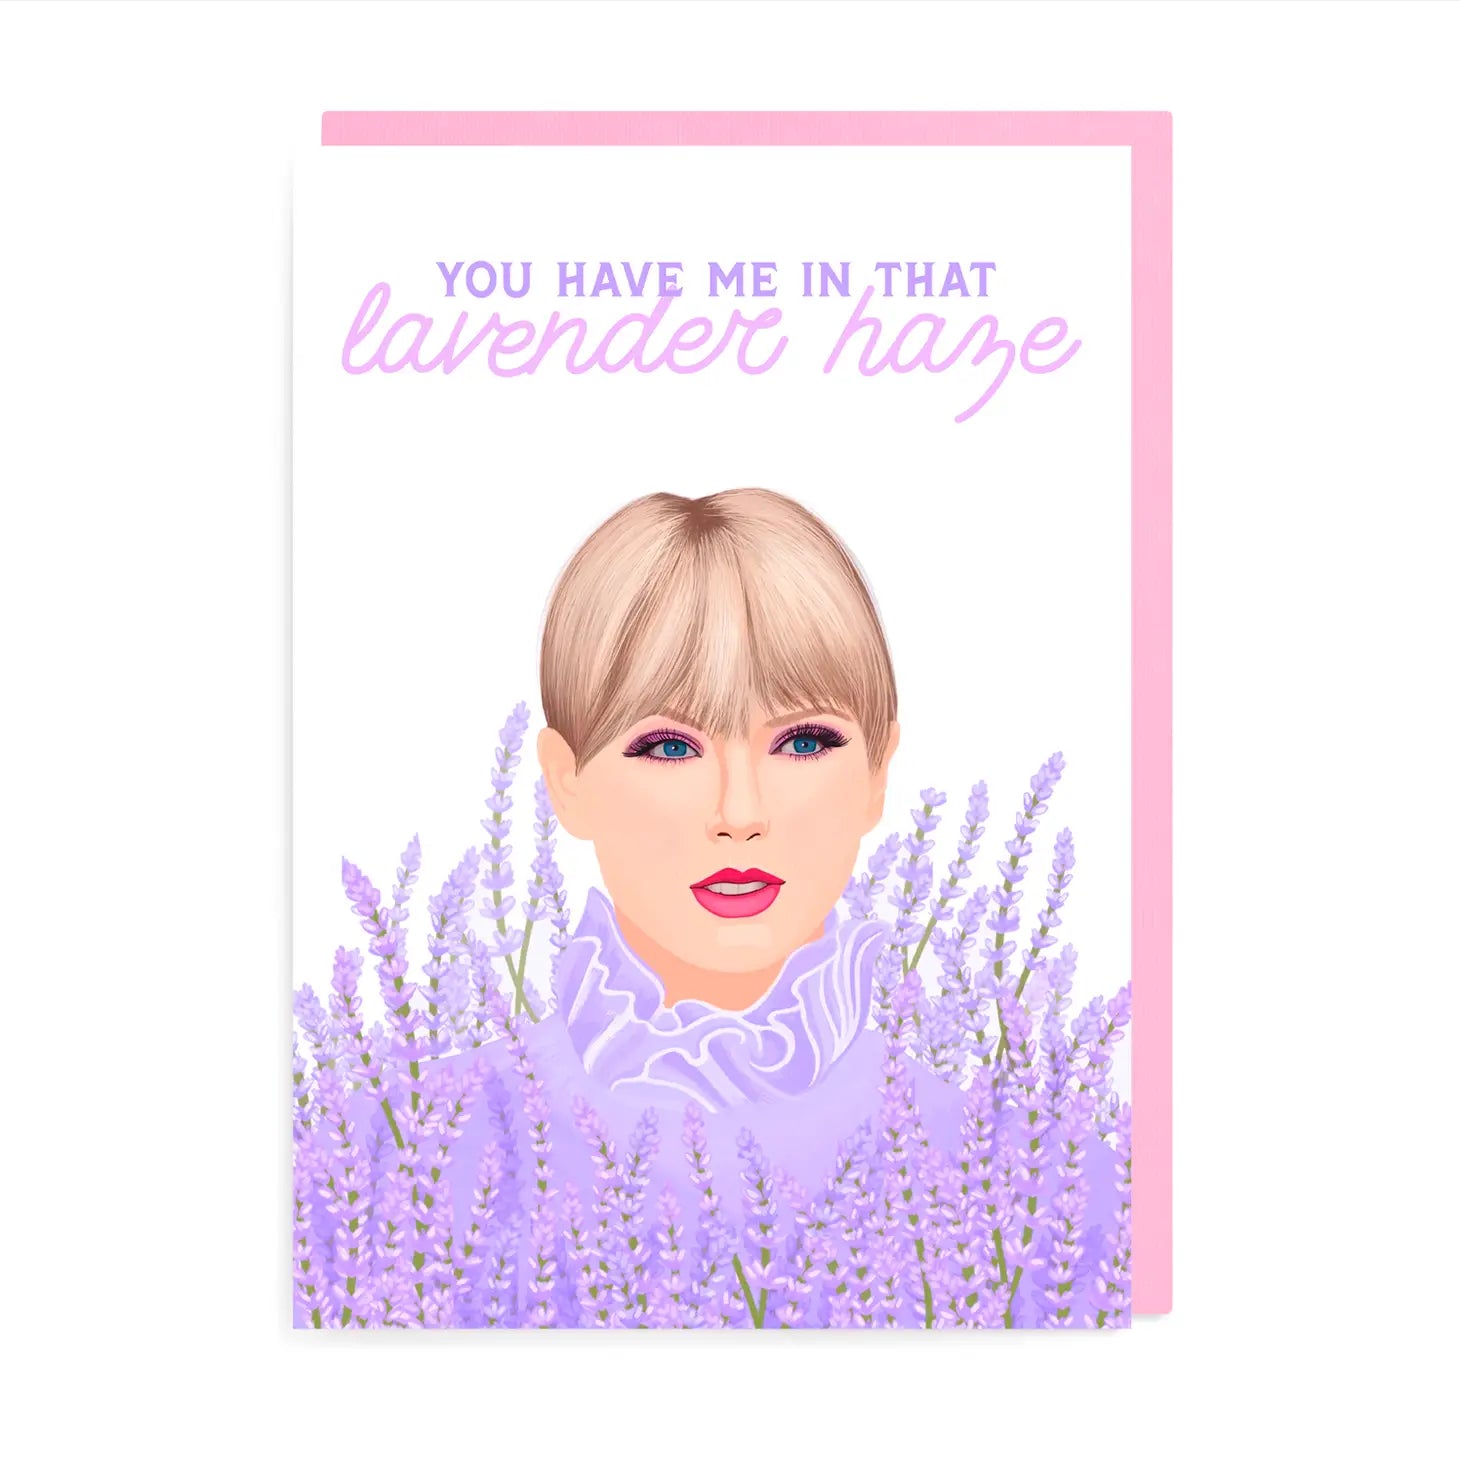 Lavender Haze Taylor Swift Birthday Card